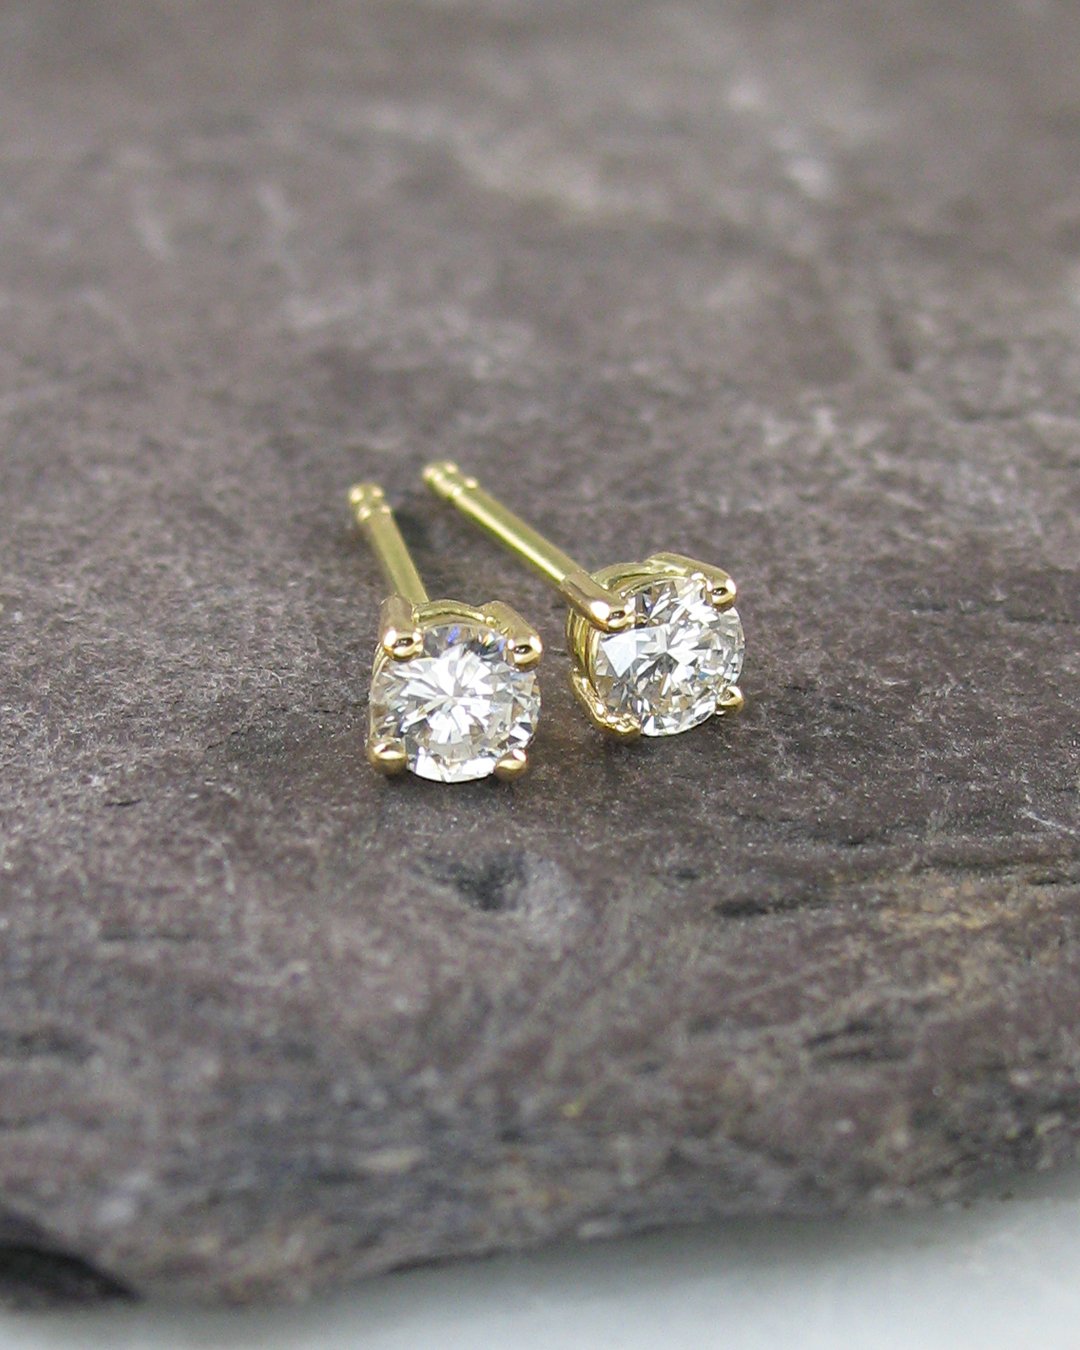 A classic pair of diamond stud earrings